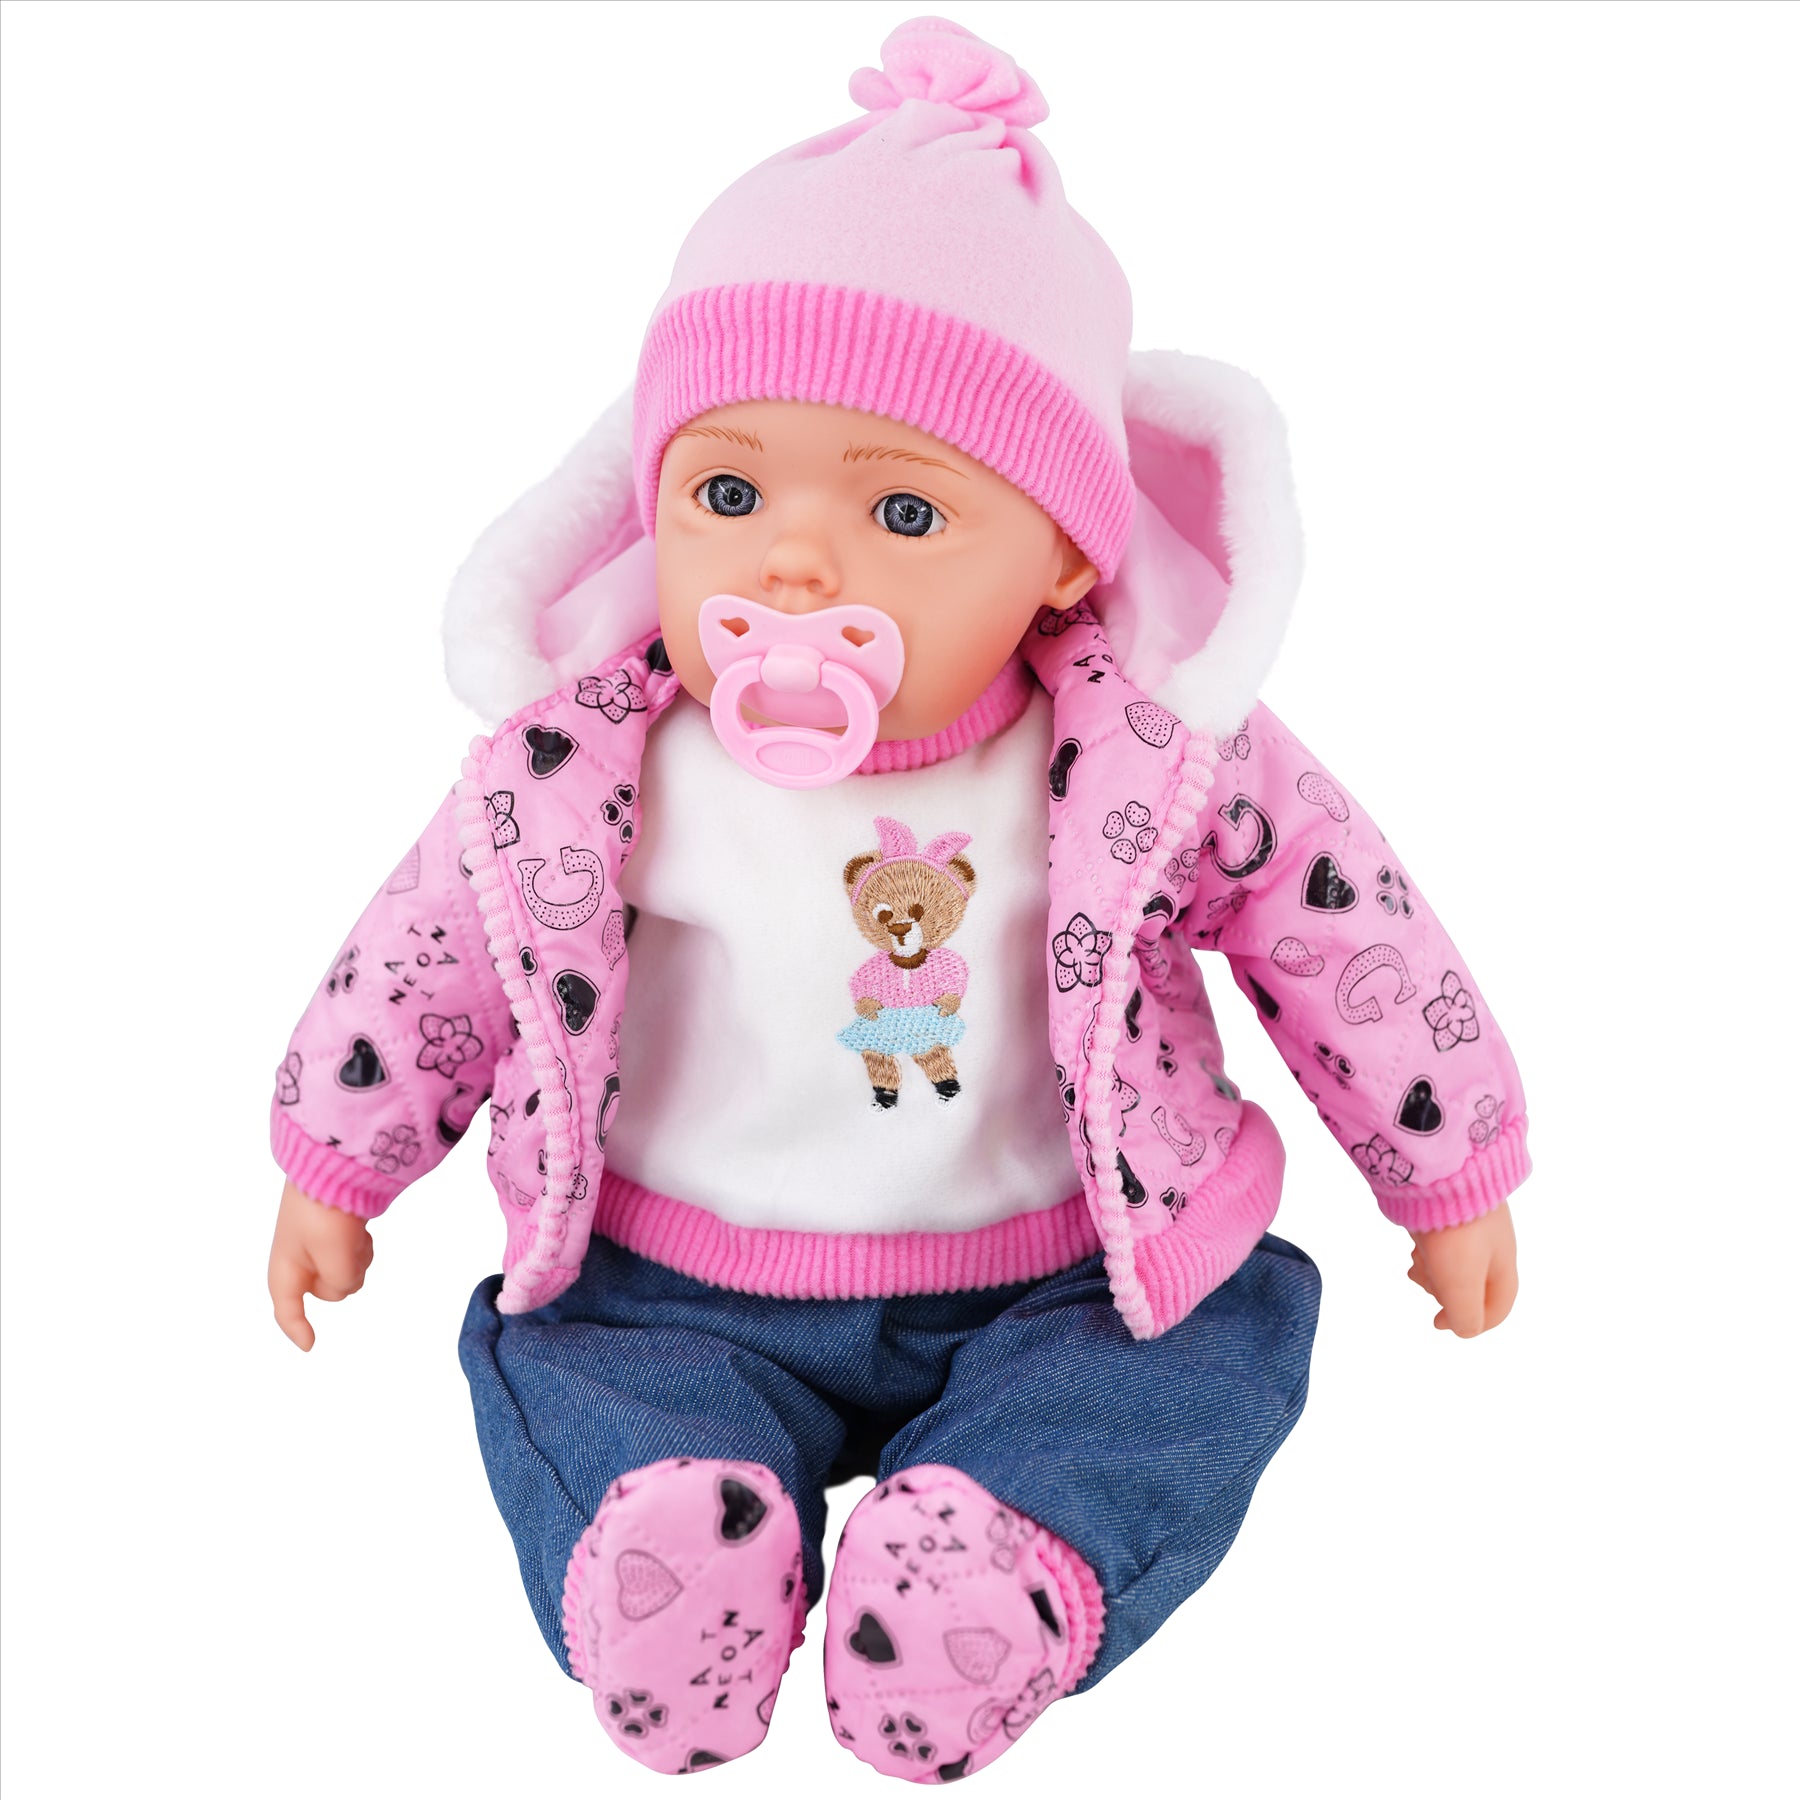 BiBi Baby Doll "Pinky" (50 cm / 20") by BiBi Doll - The Magic Toy Shop